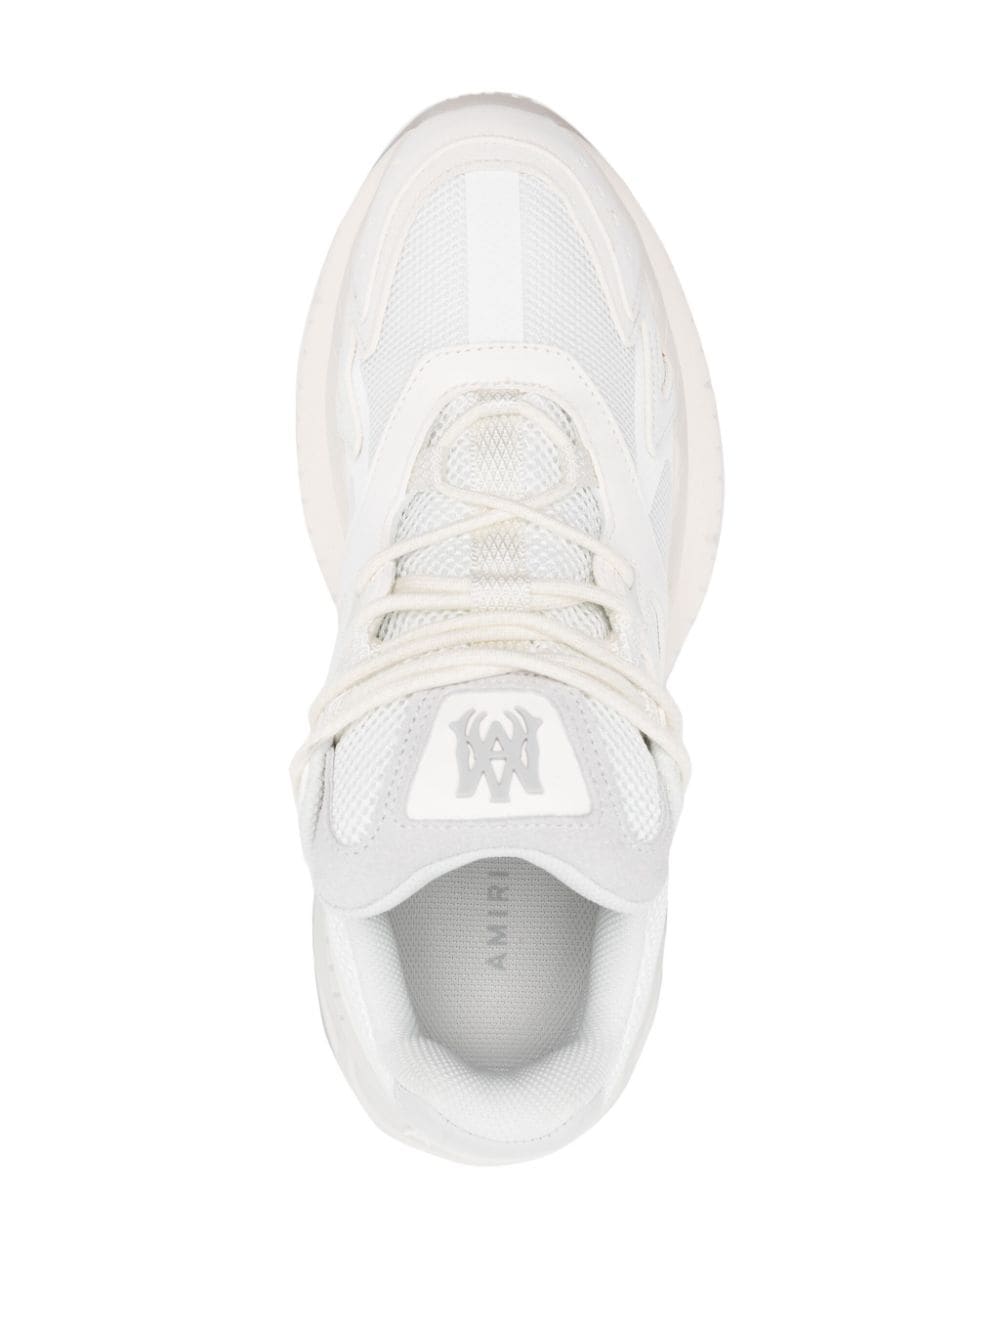 MA Runner sneakers